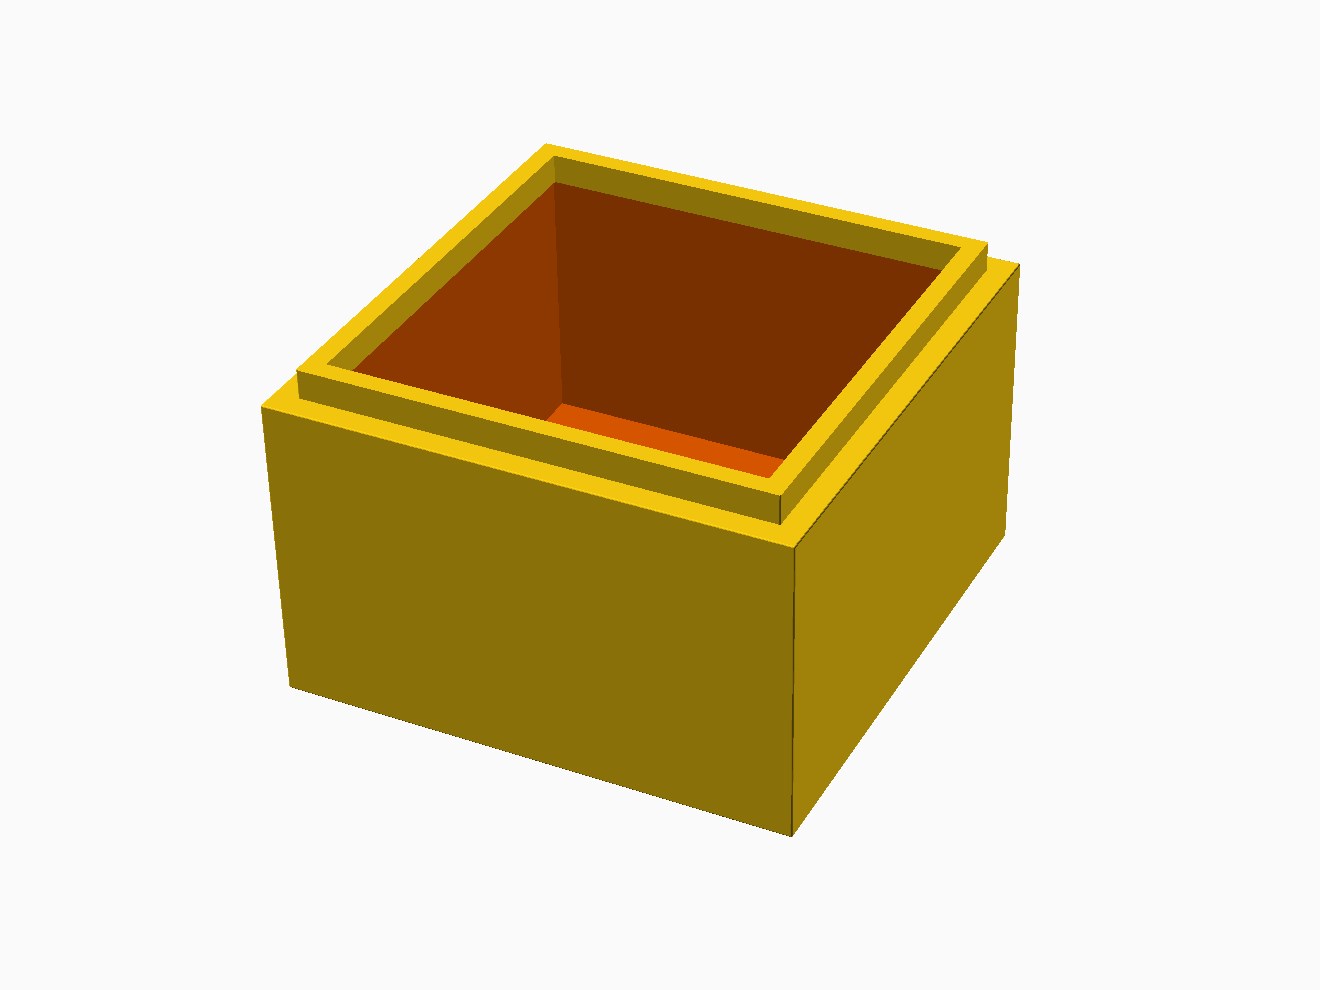 3D printable model of a LEGO 4x4 box.